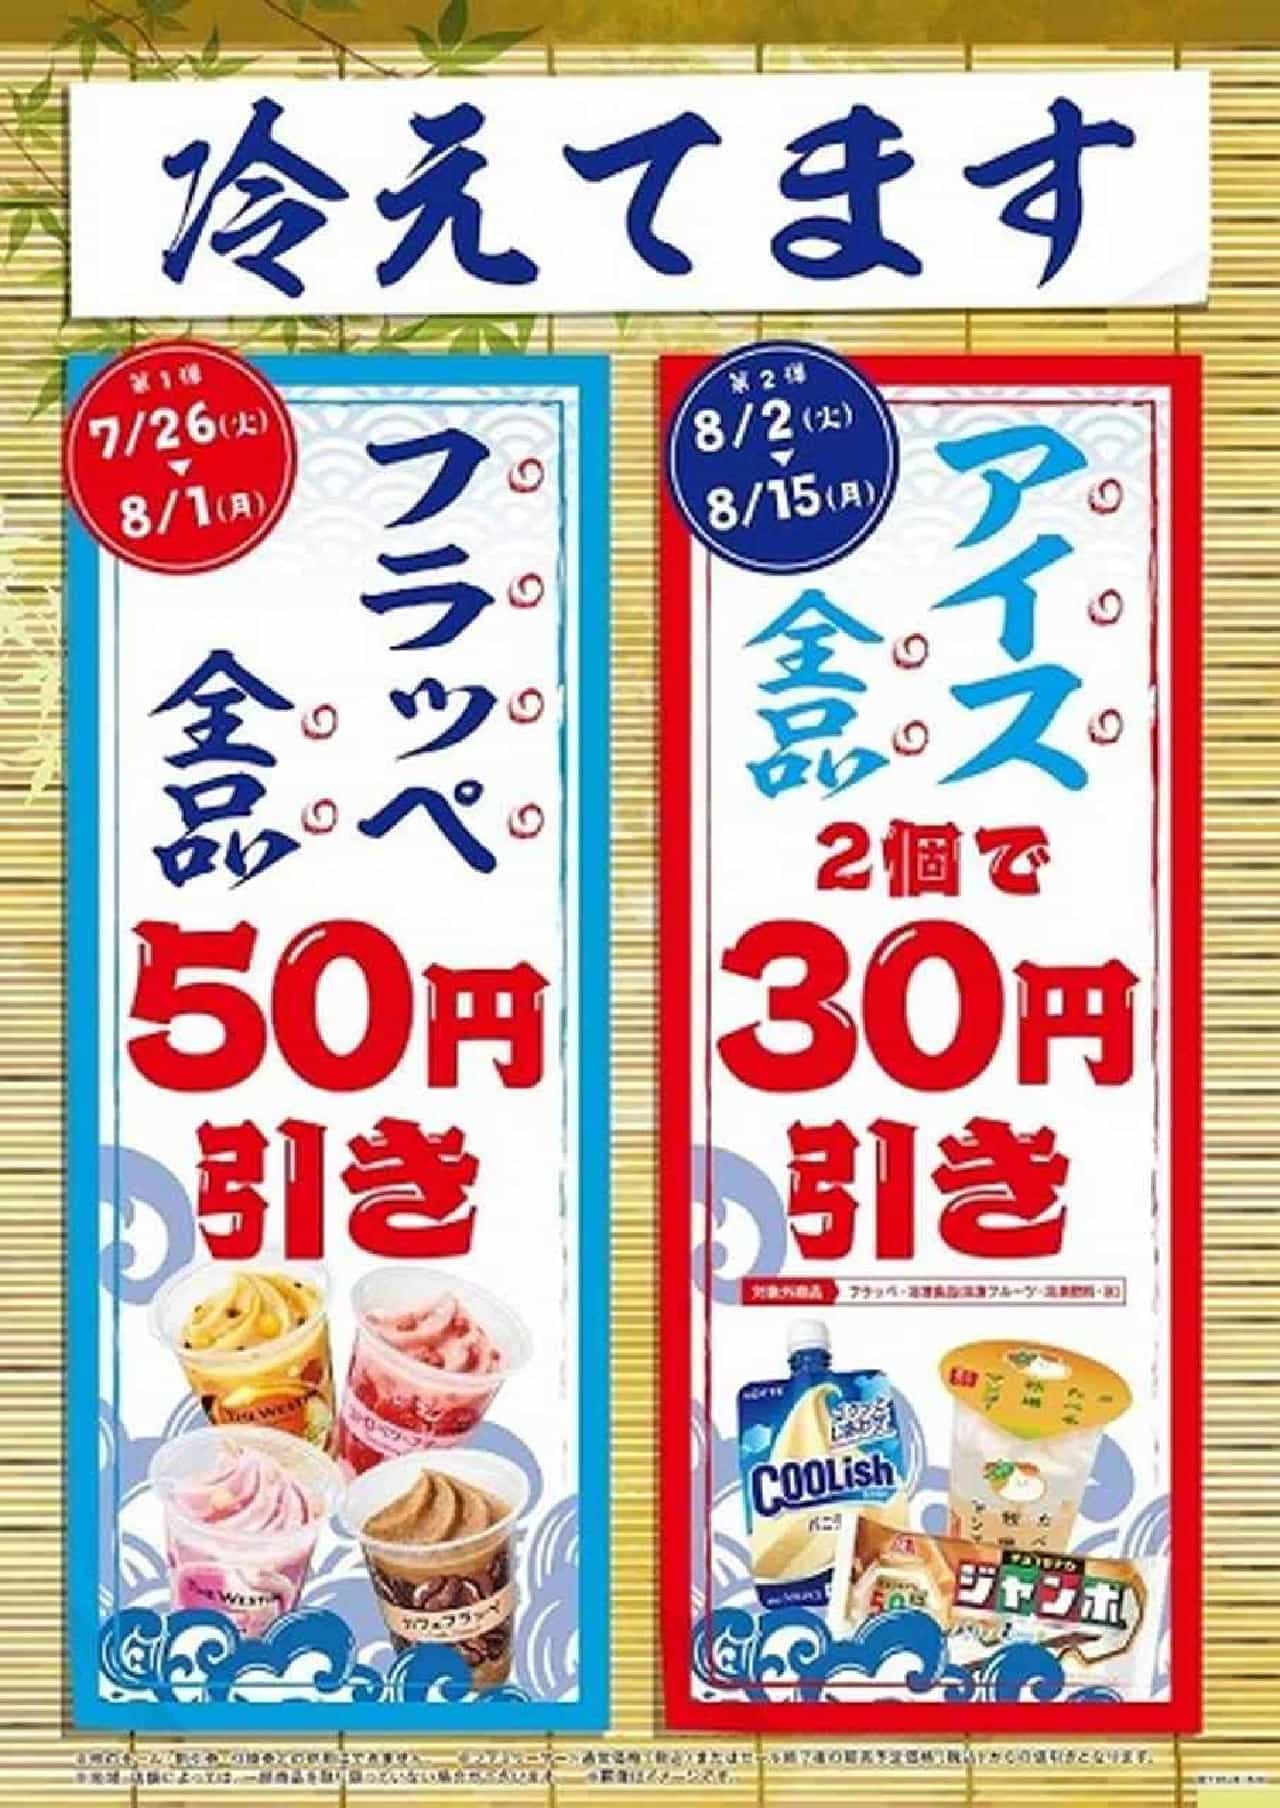 Famima "Chilled" Frappe & Ice Cream All Discount Campaign